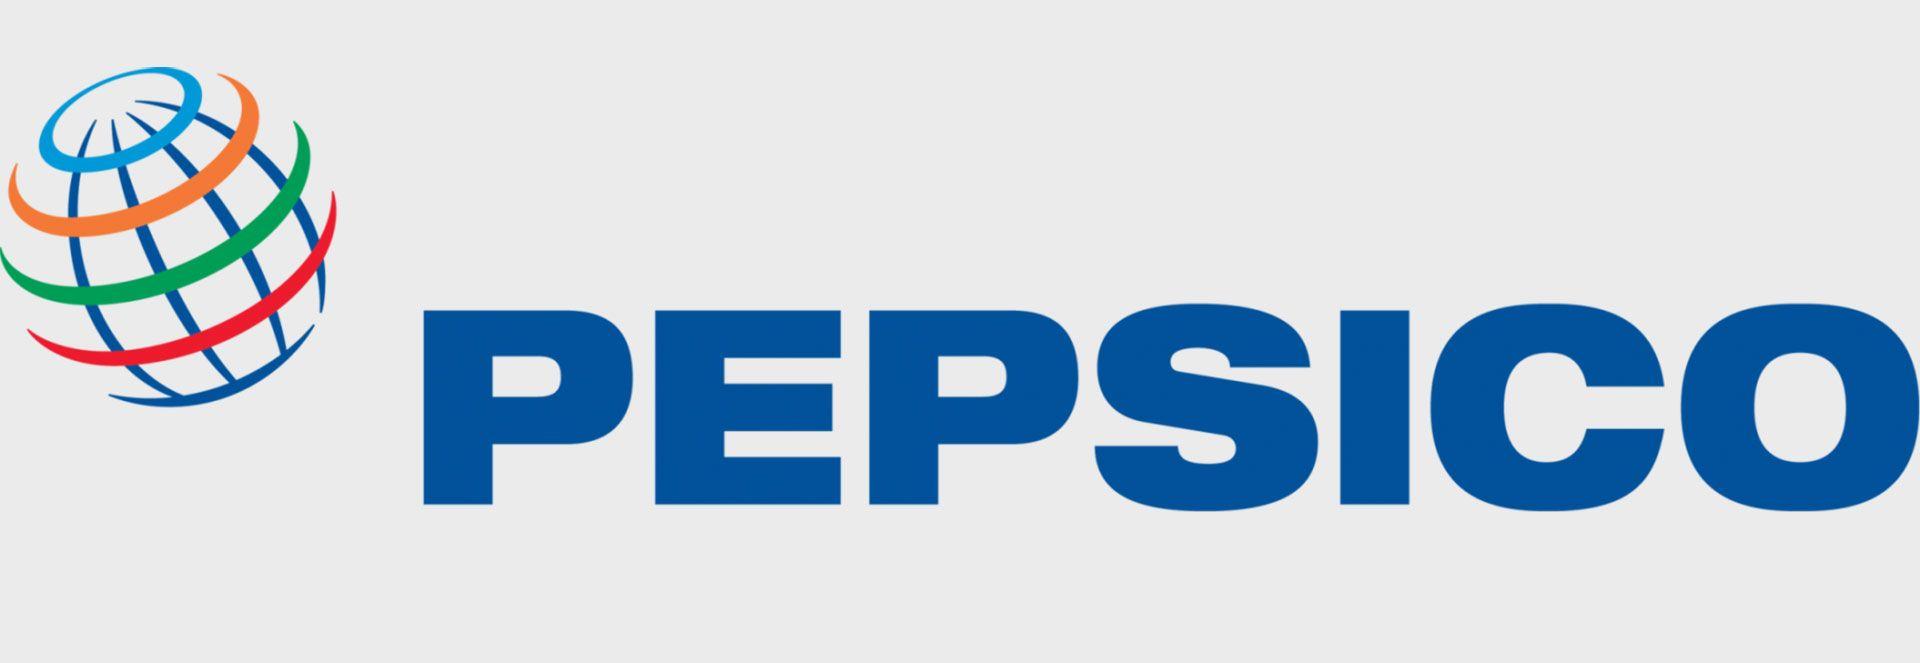 PepsiCo Corporate Logo - New PepsiCo Platform to Develop Emerging Brands